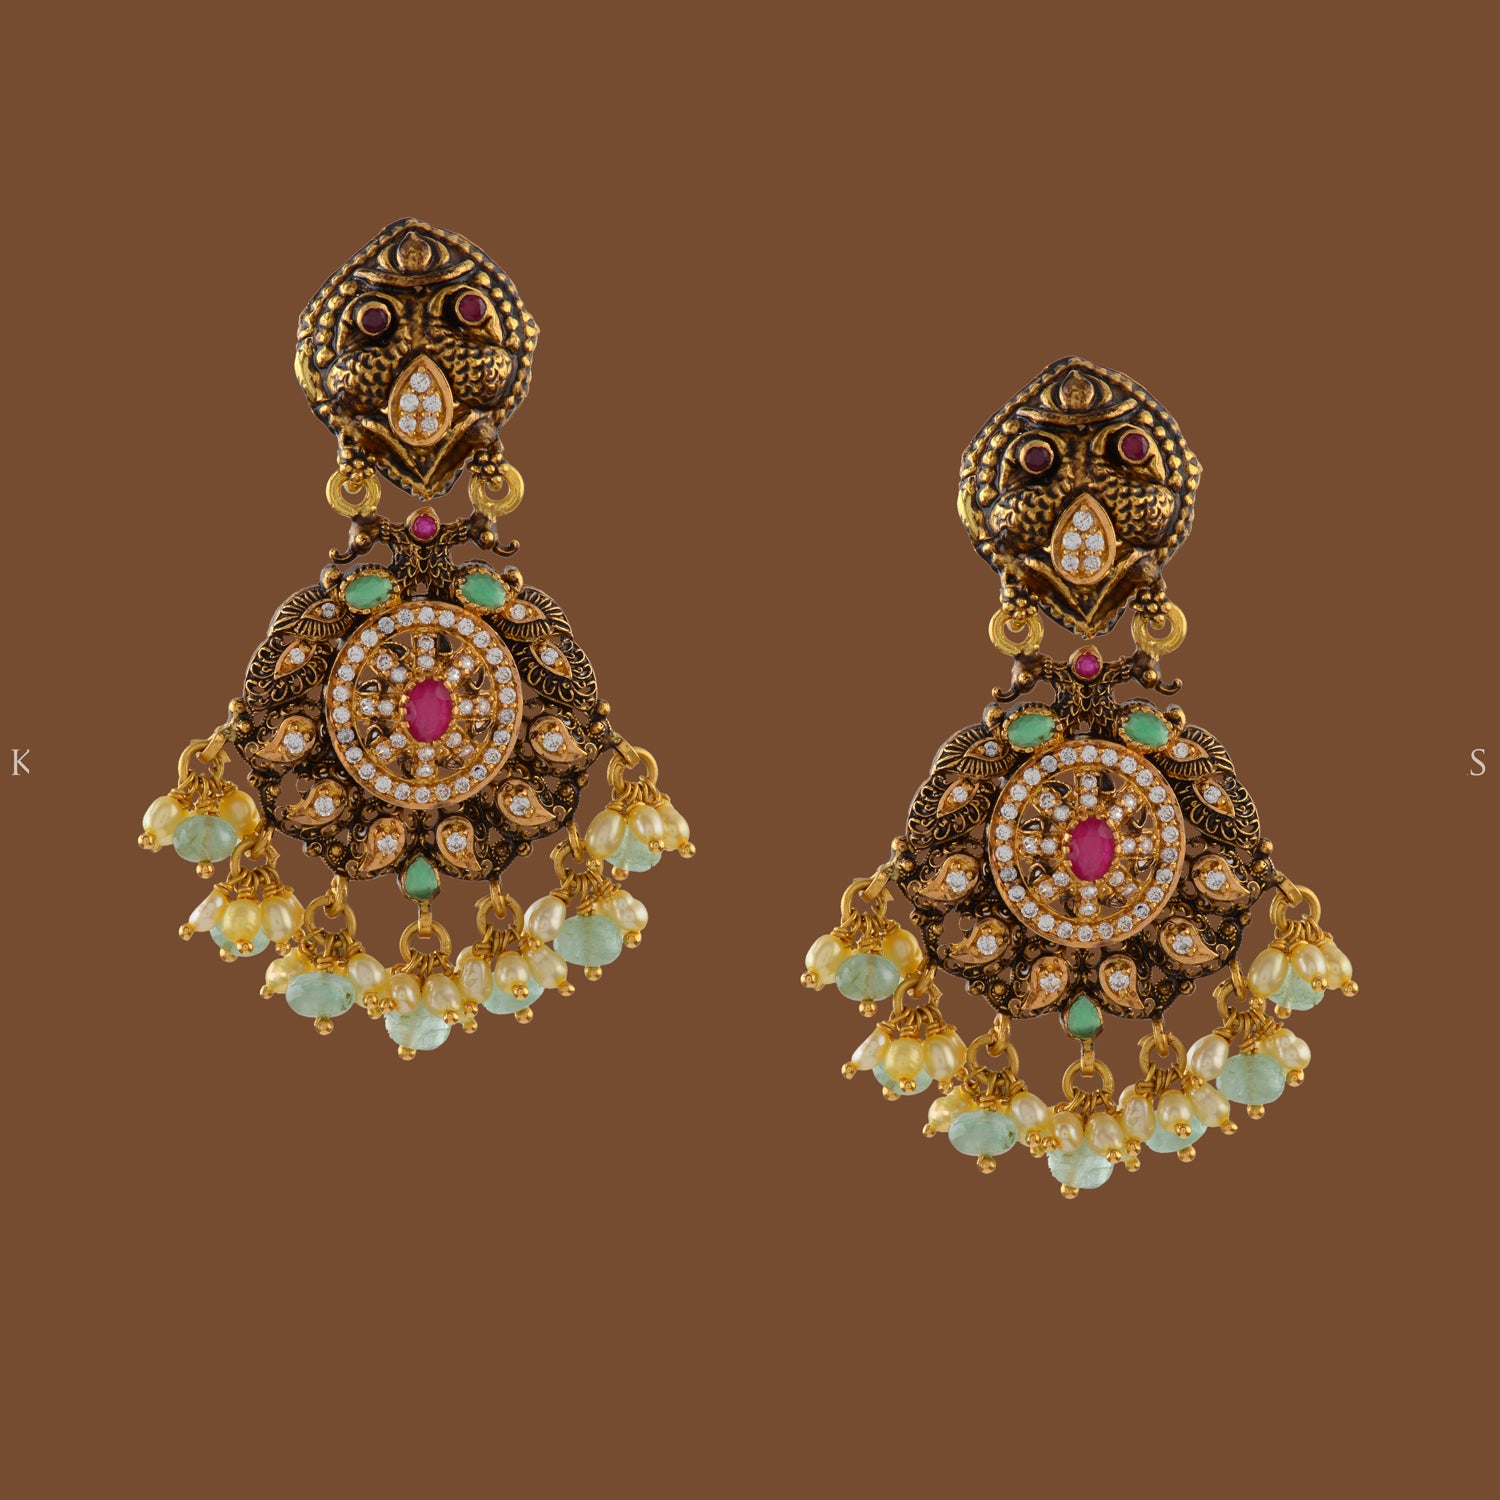 Antique Gold Earrings in Peacock Motif